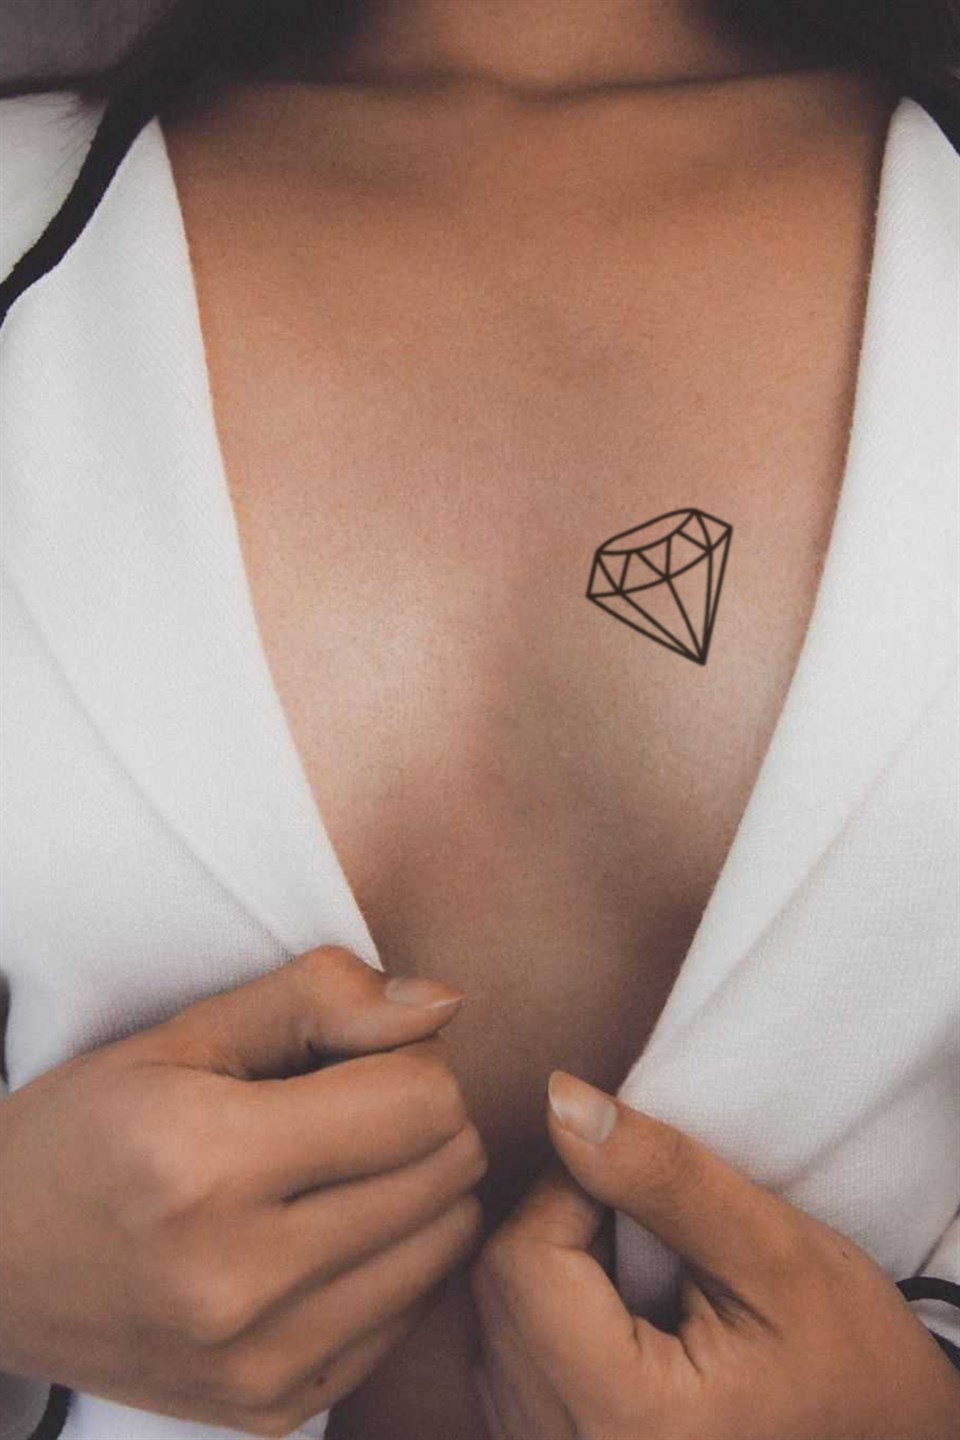 Caraku Membuat Tatto Diamond Simple || DIY tattoo - YouTube